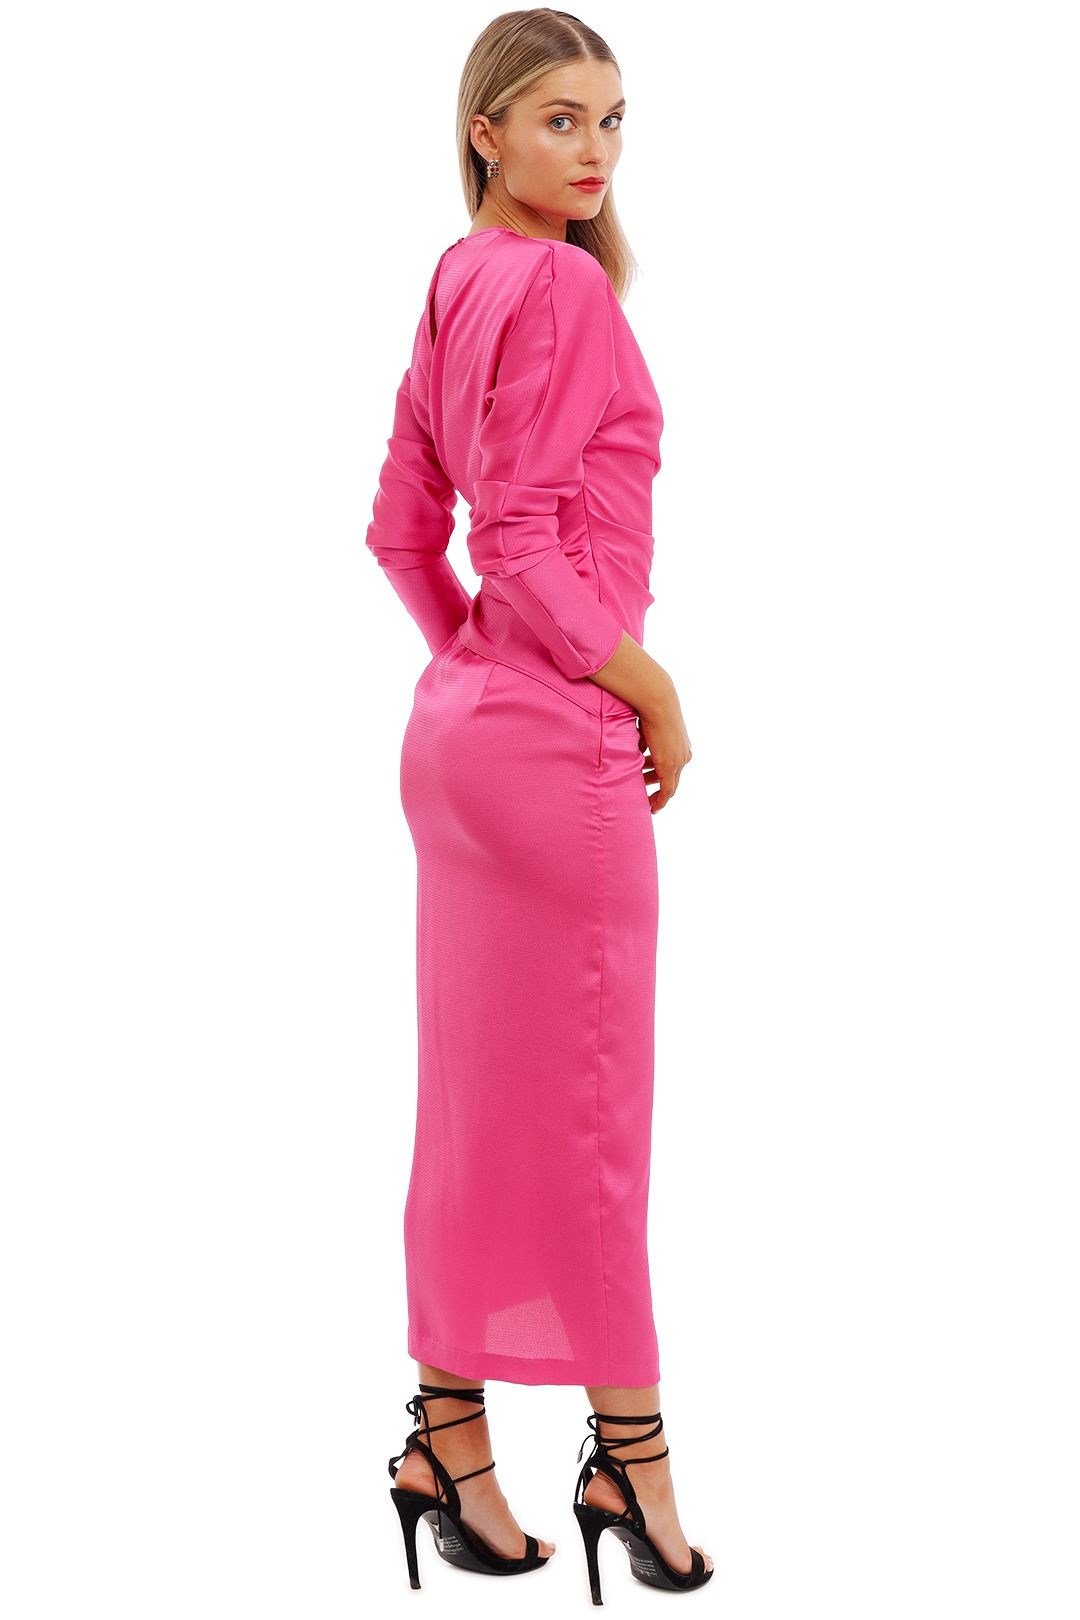 Nicola Finetti Arienne Dress Pink Satin Look